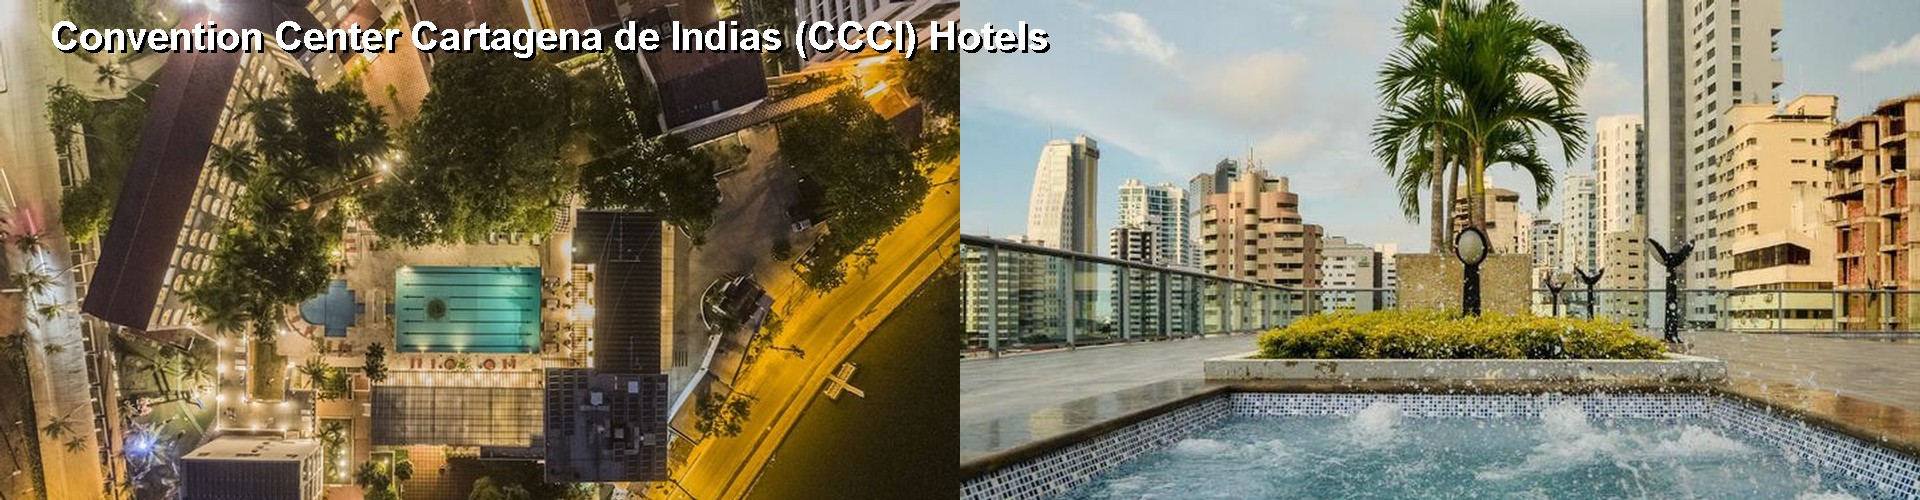 5 Best Hotels near Convention Center Cartagena de Indias (CCCI)